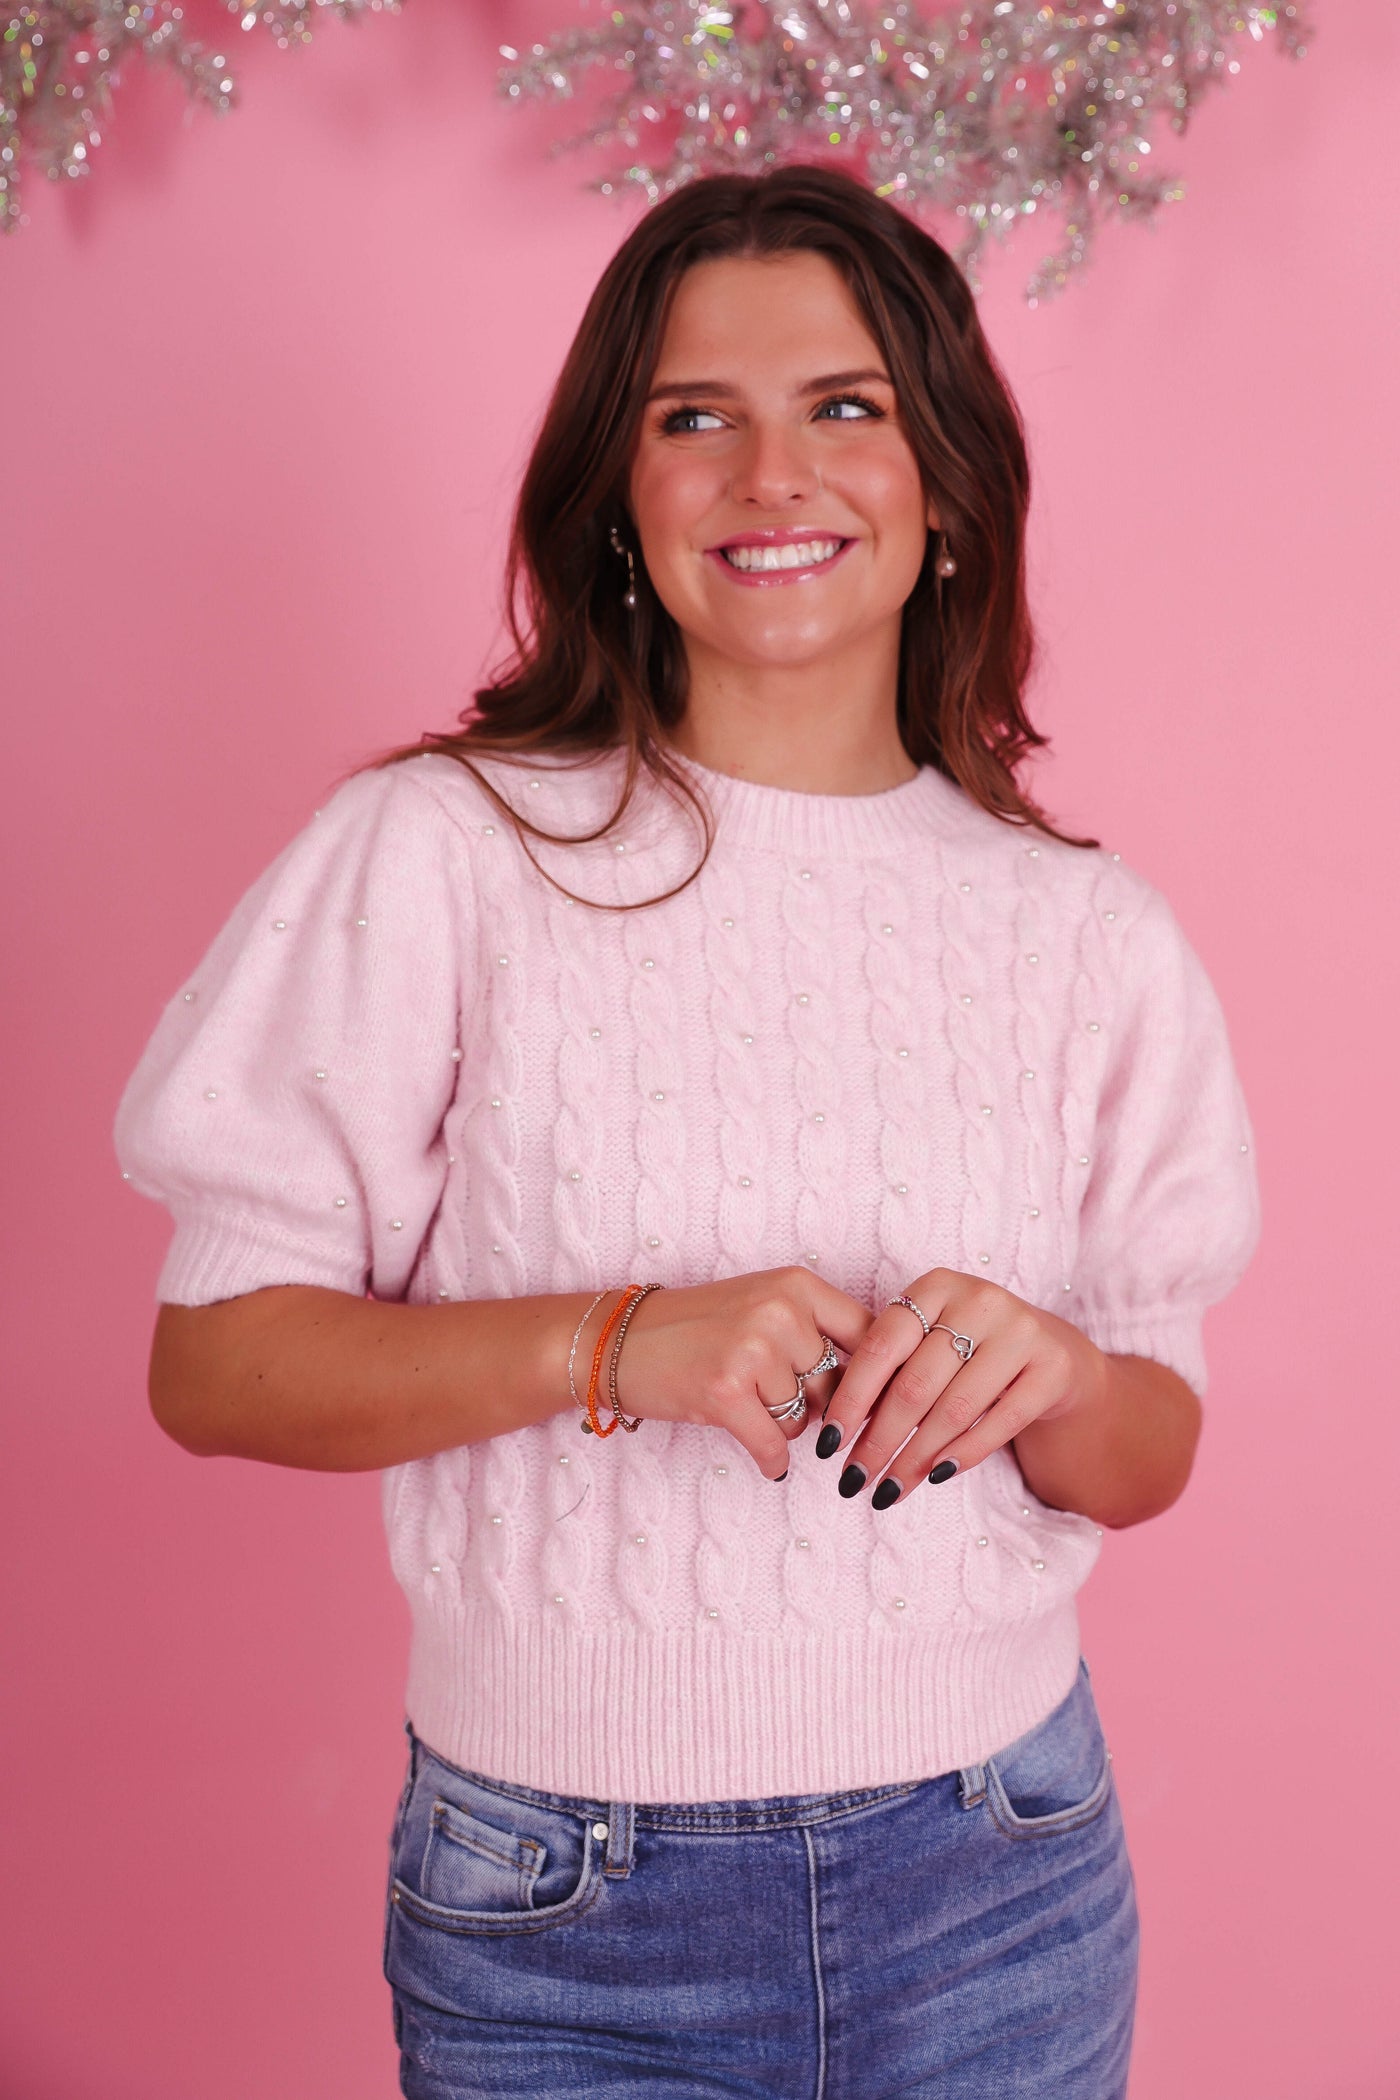 Women's Soft Pink Sweater- Women's Pearl Pink Sweater- She + Sky Sweaters